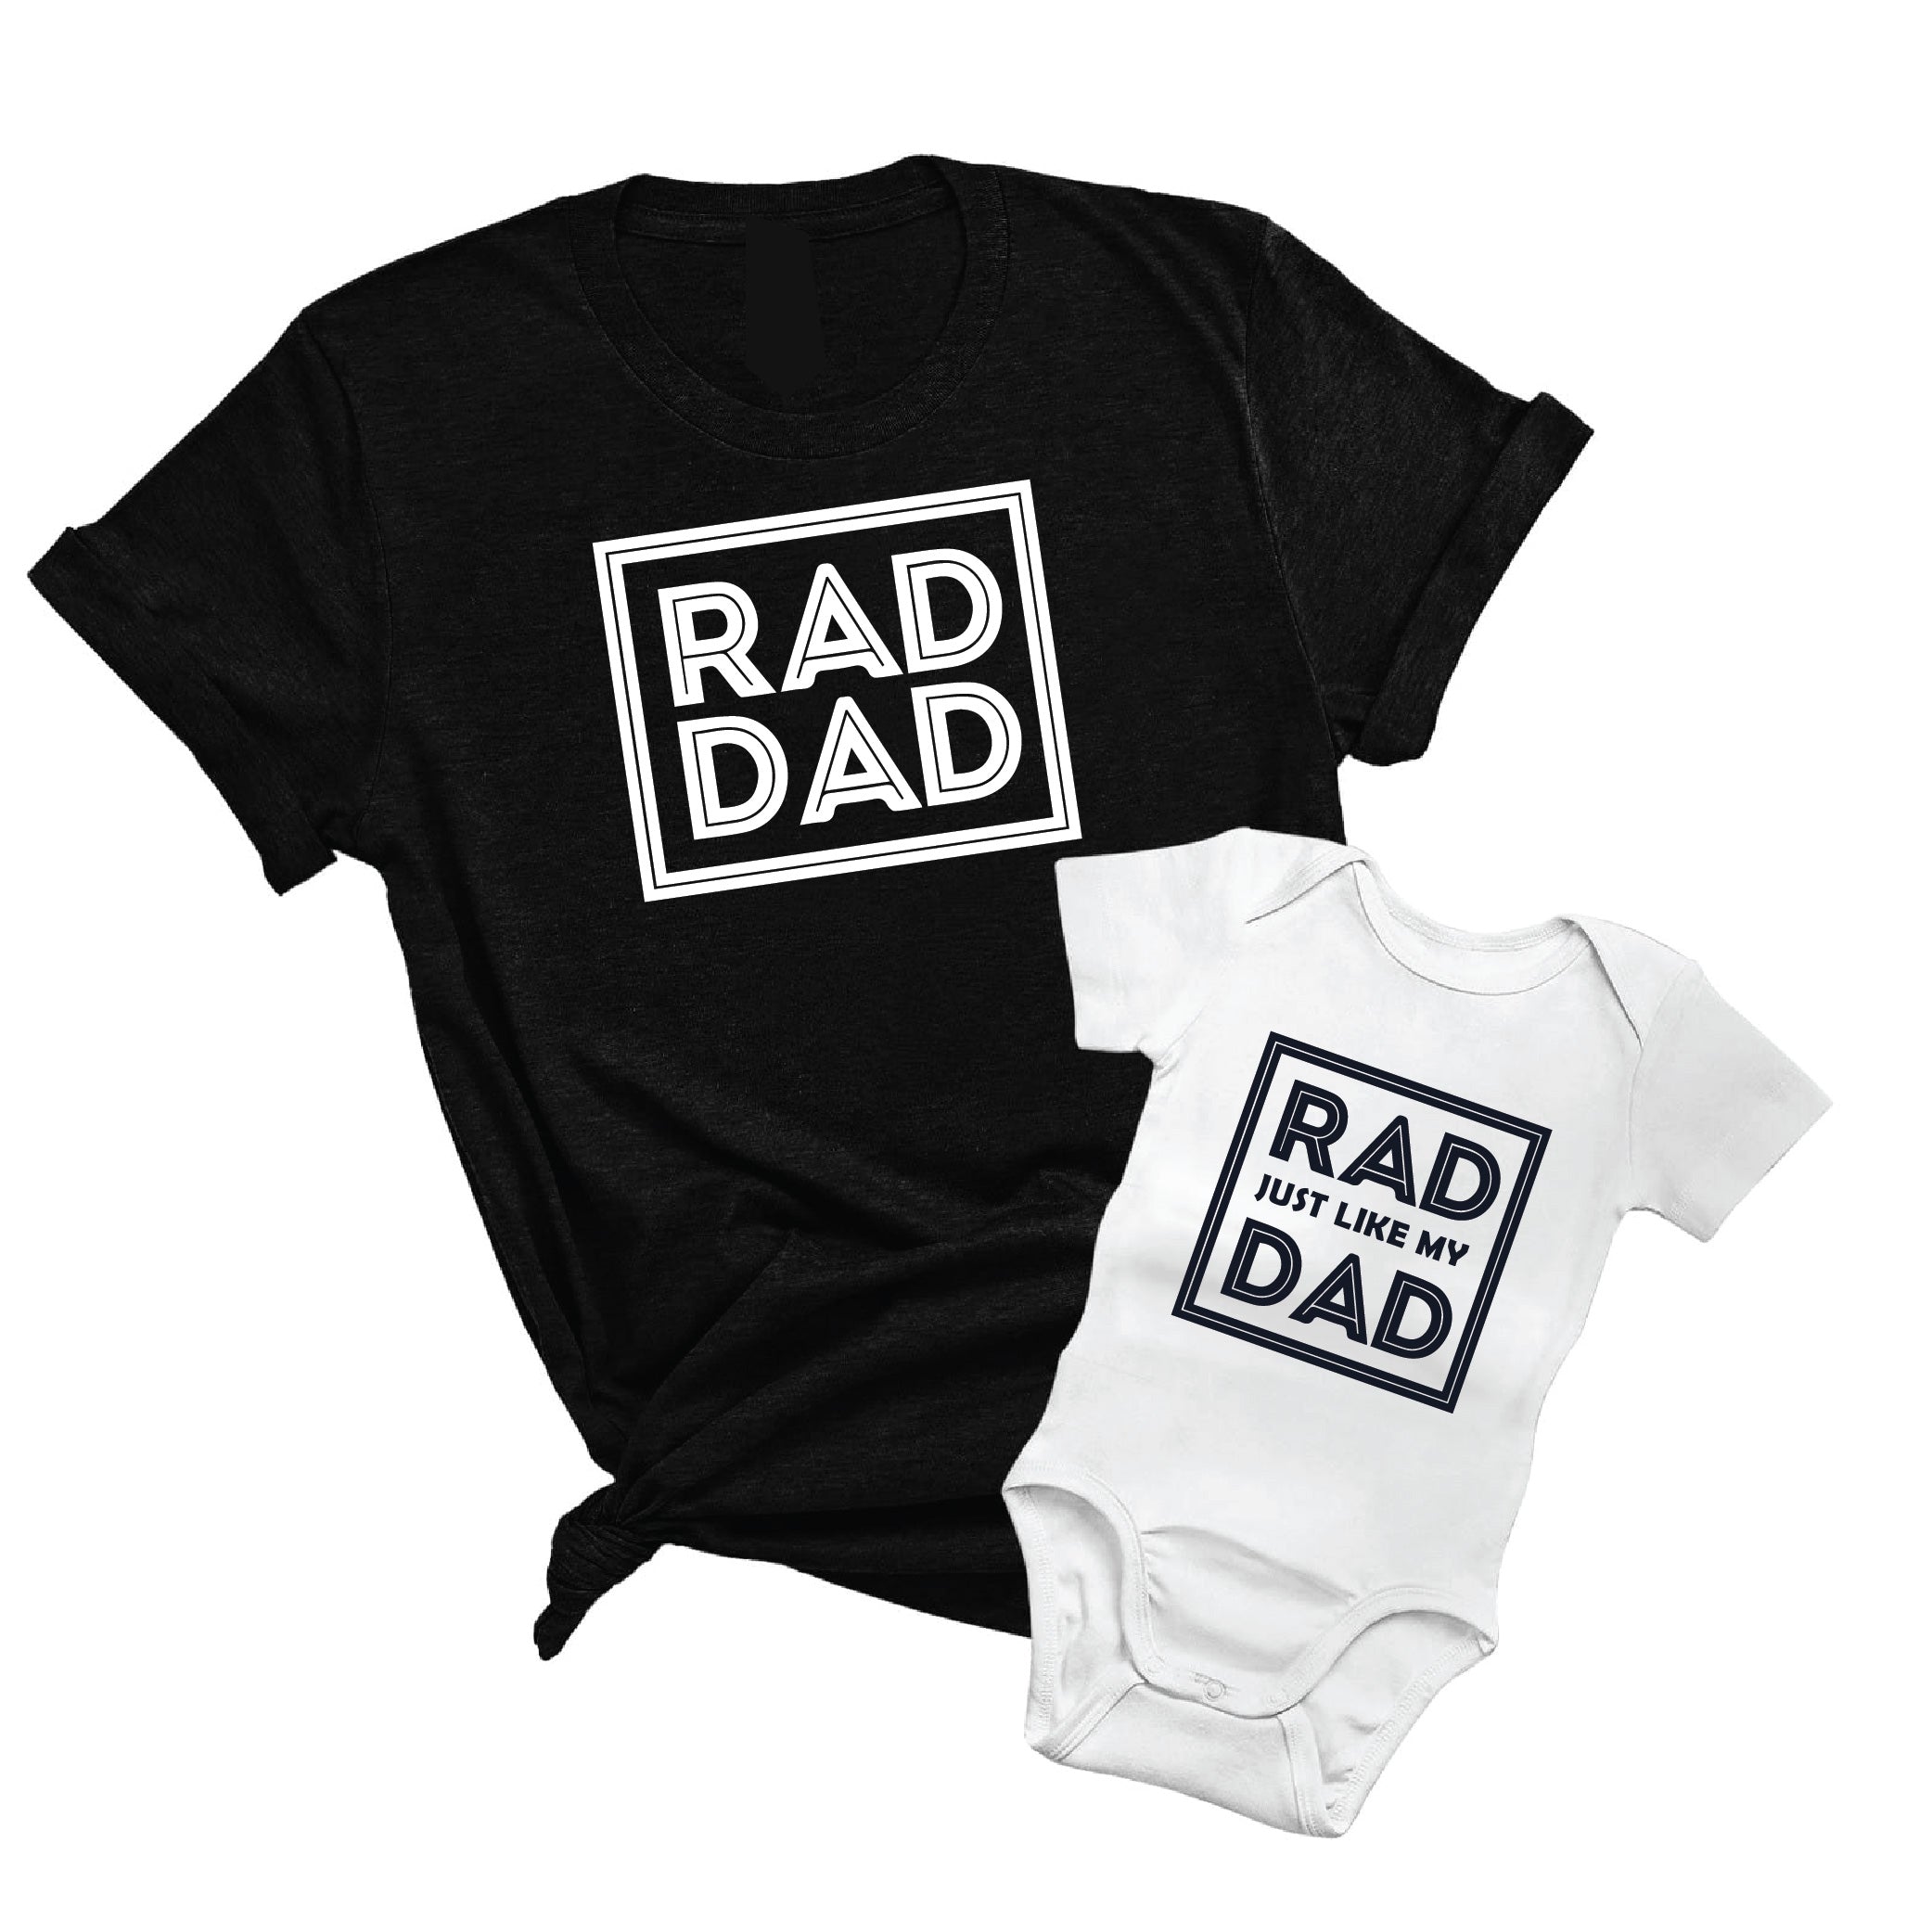 Rad Dad, Rad Just Like My Dad - Combo of Adult Tshirt + Kid's Tshirt/Onesie